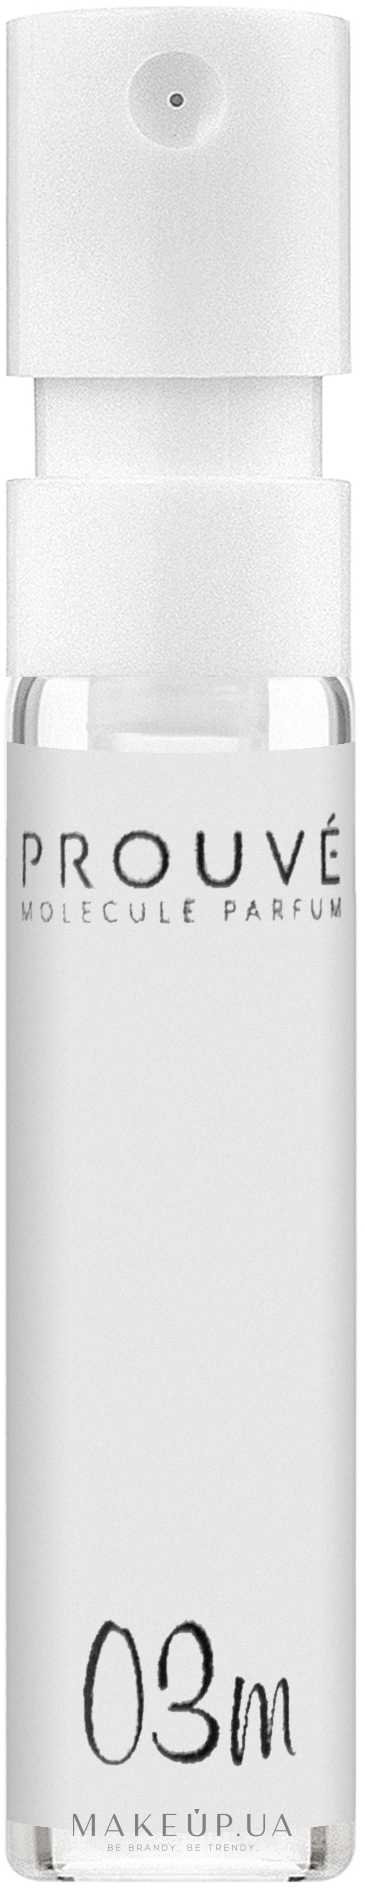 Prouve Molecule Parfum №03m - Духи (пробник) — фото 2ml